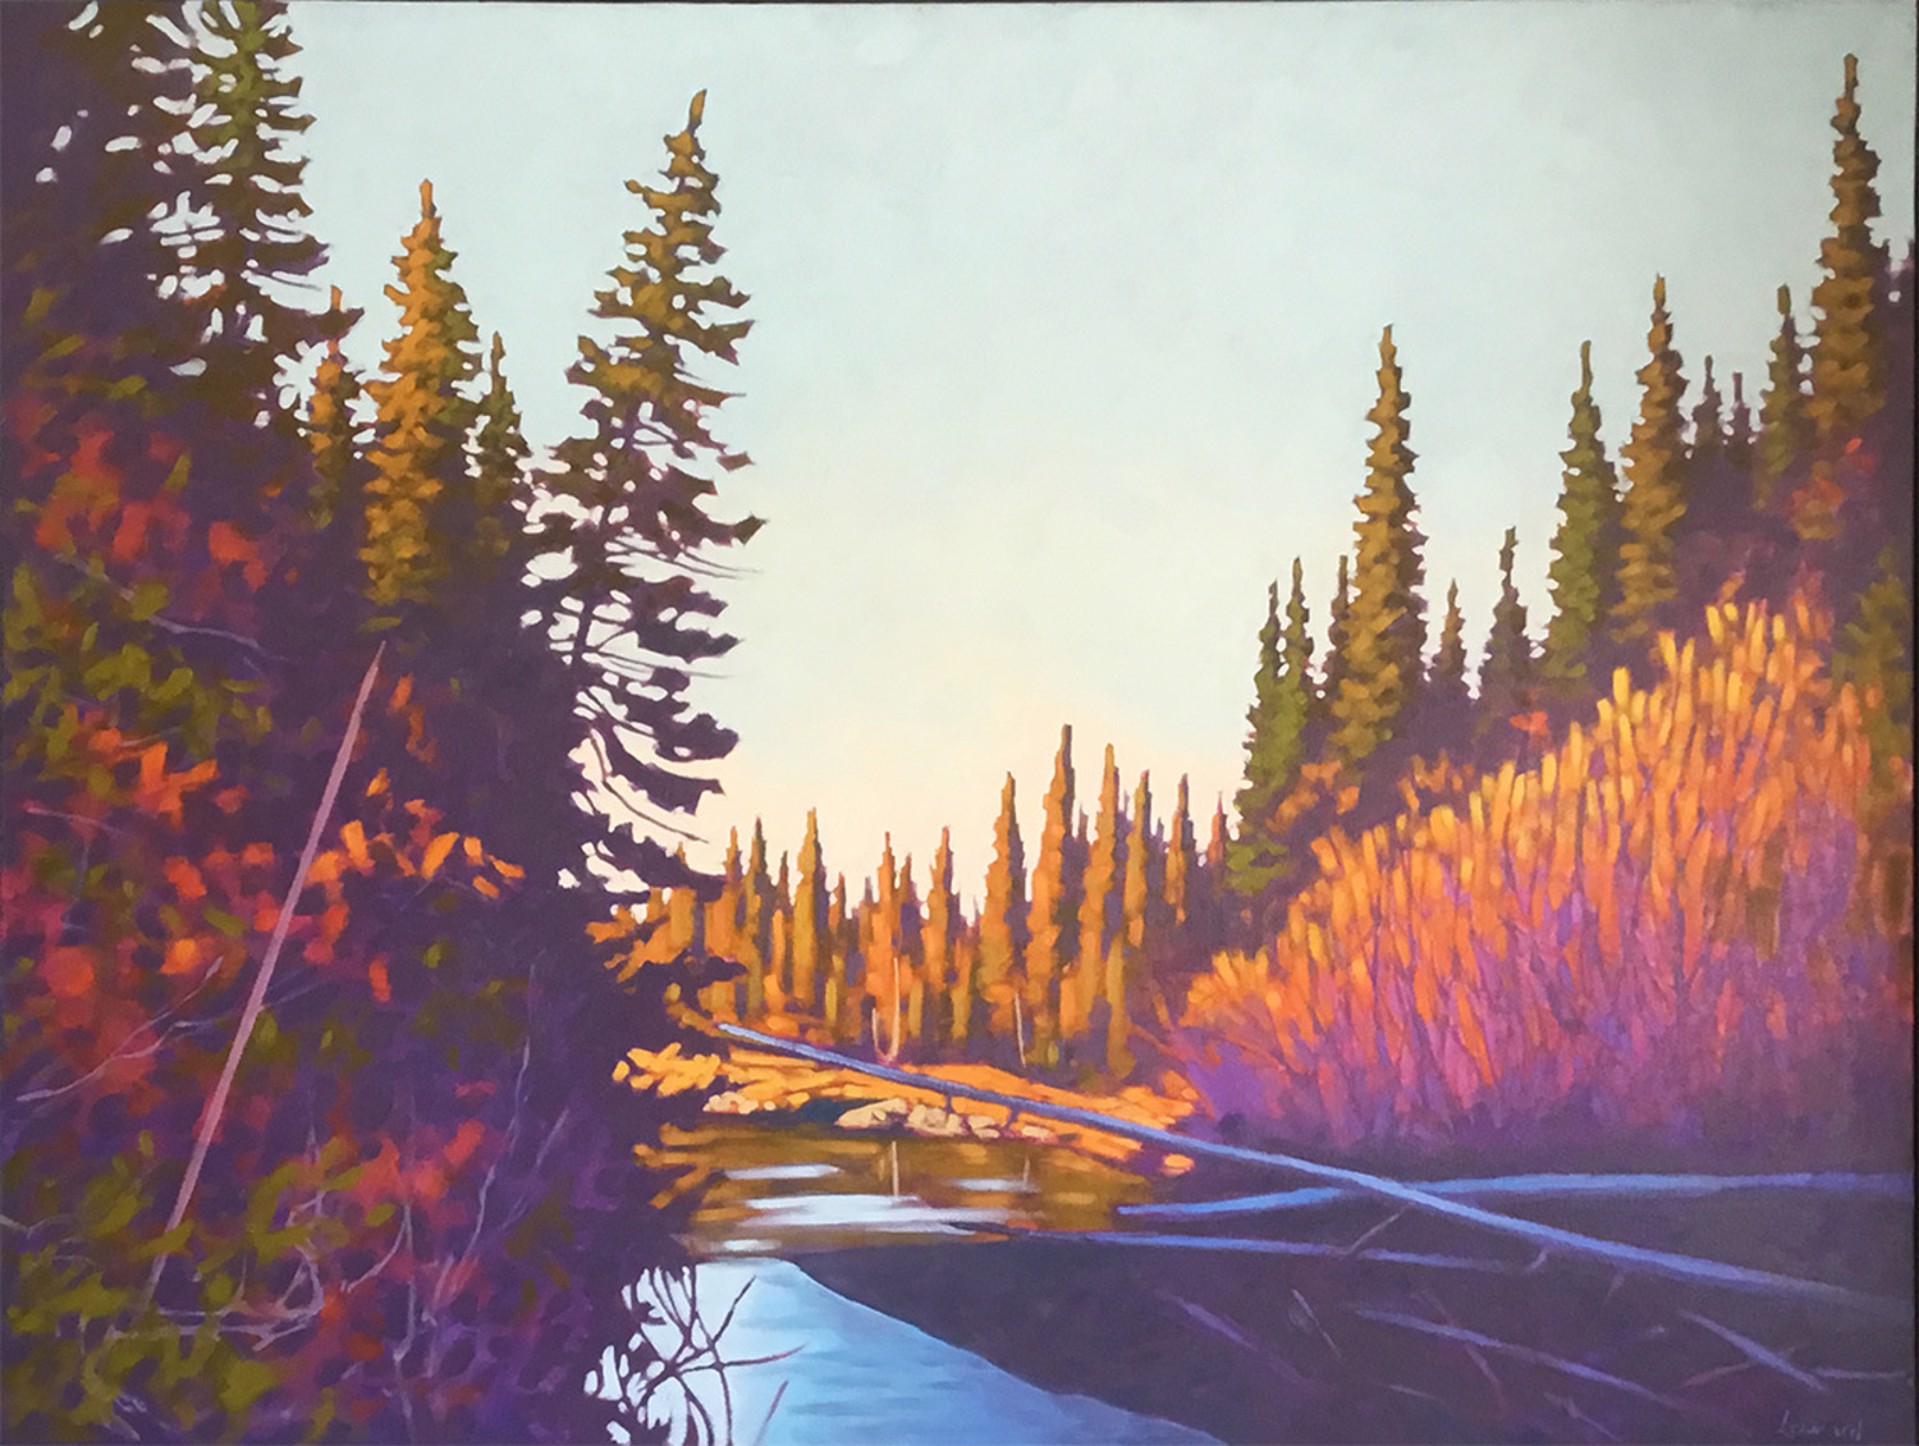 River Bend by John Lennard